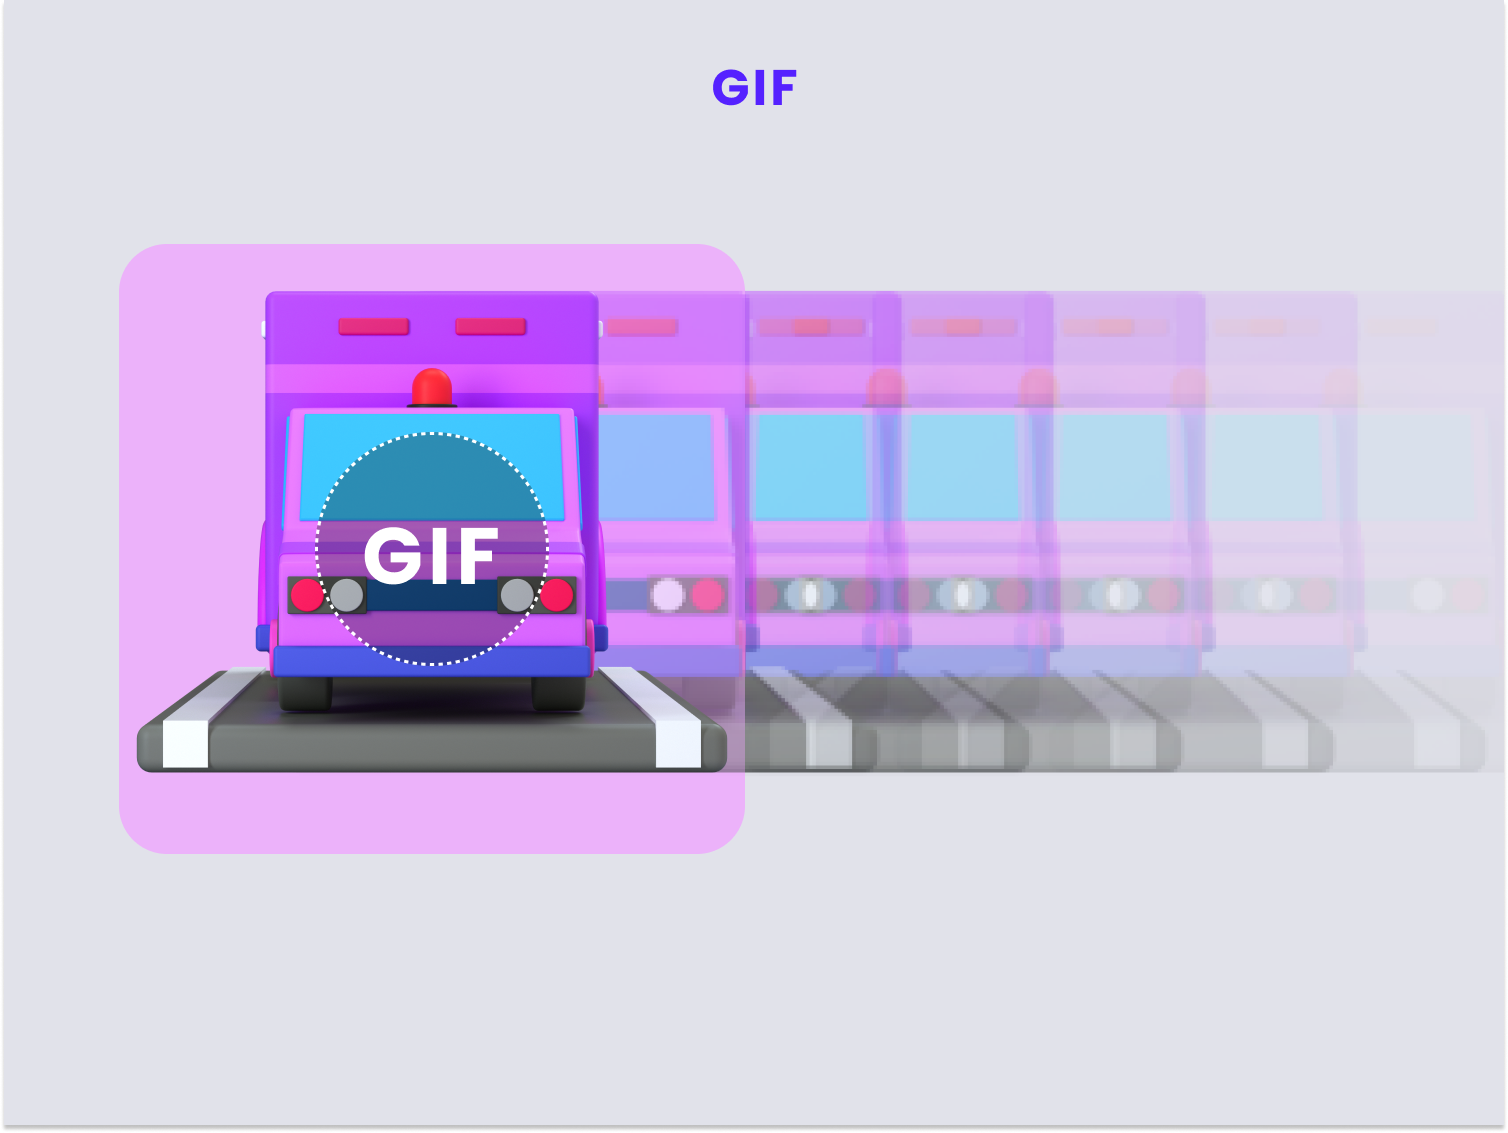 GIF image properties table